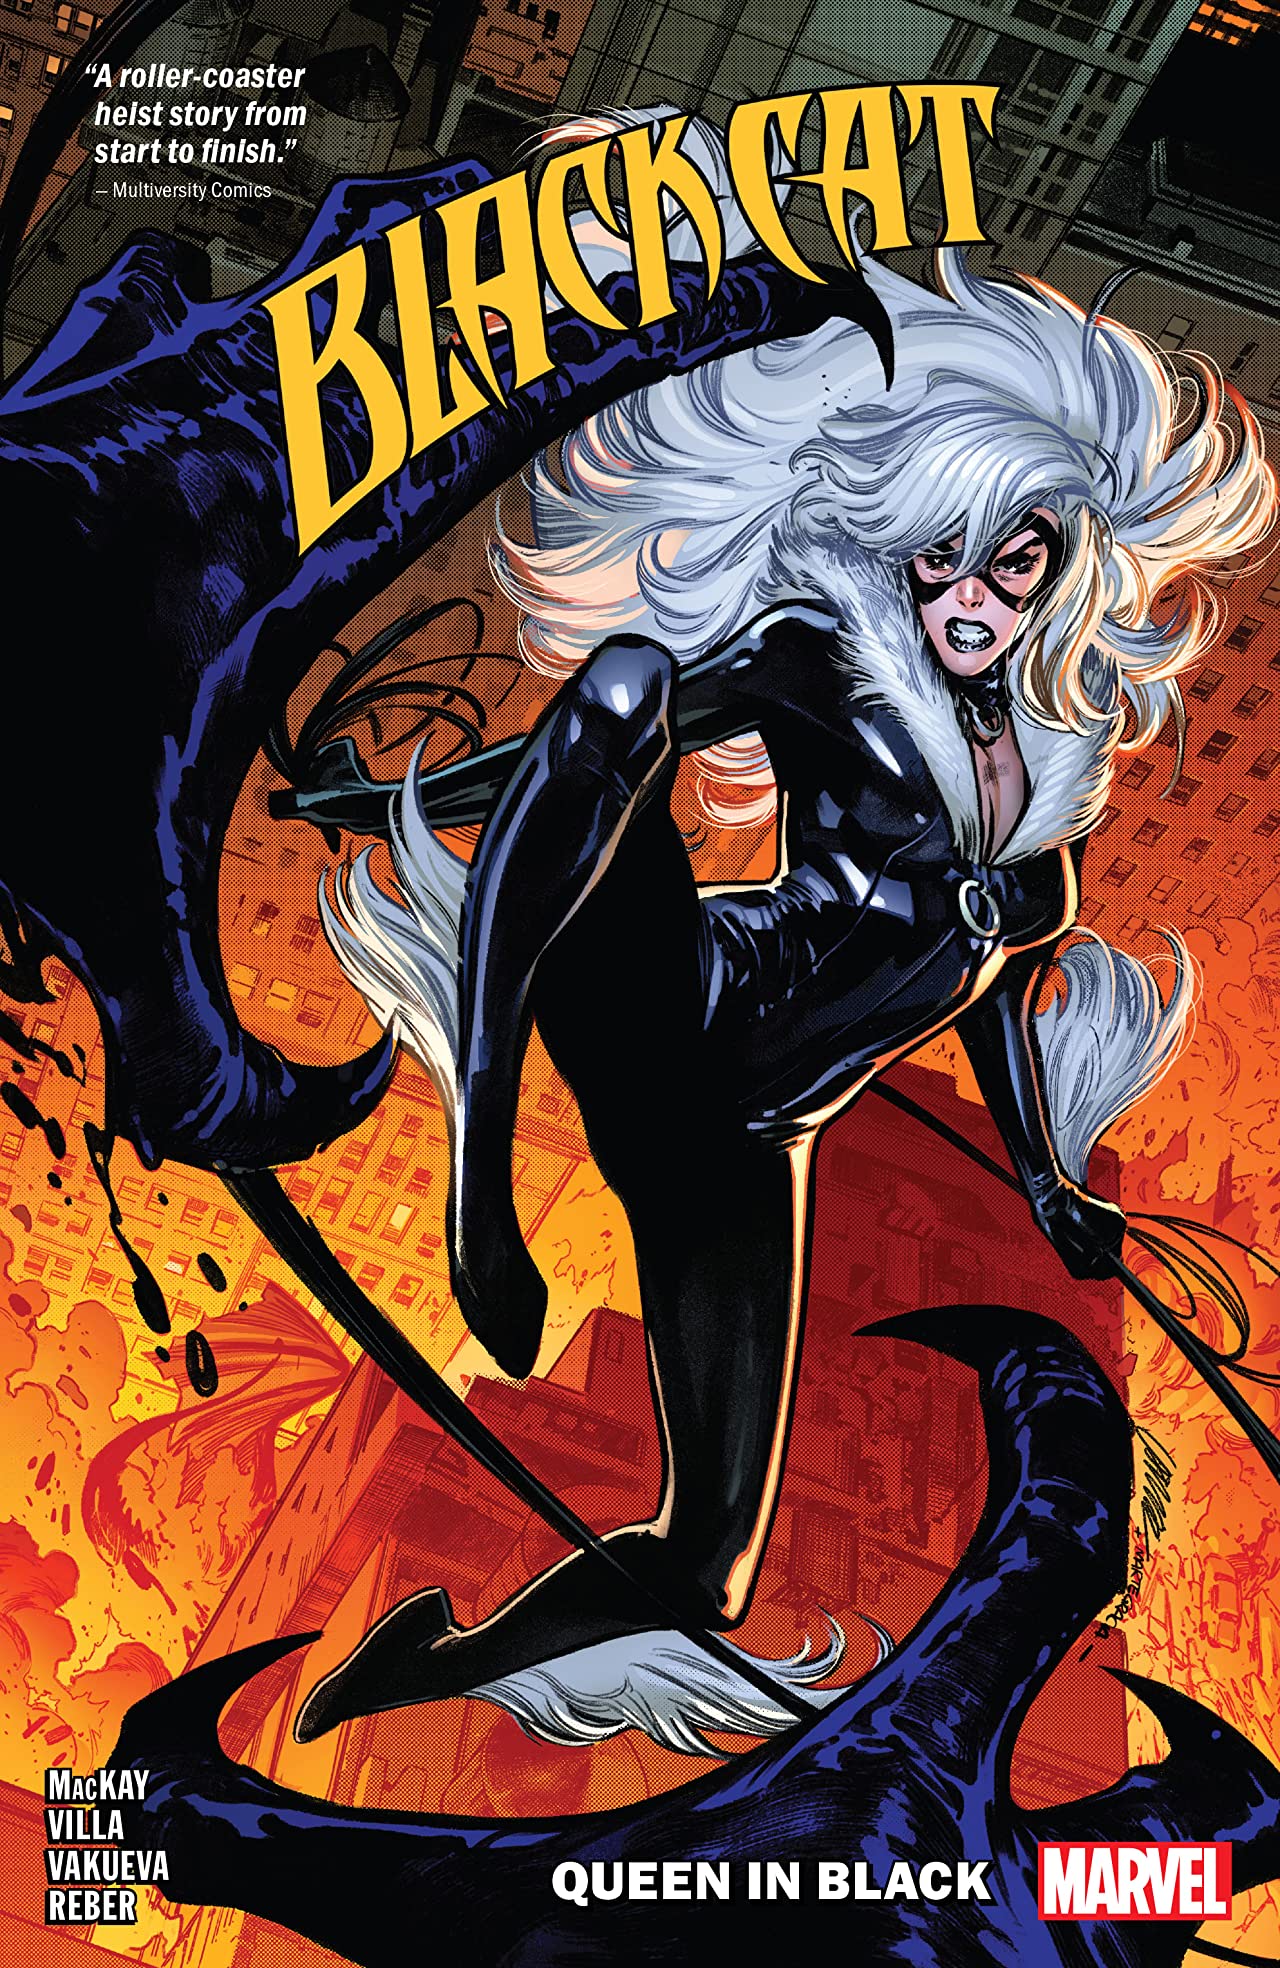 Black Cat Marvel Comic 2020 Wallpapers